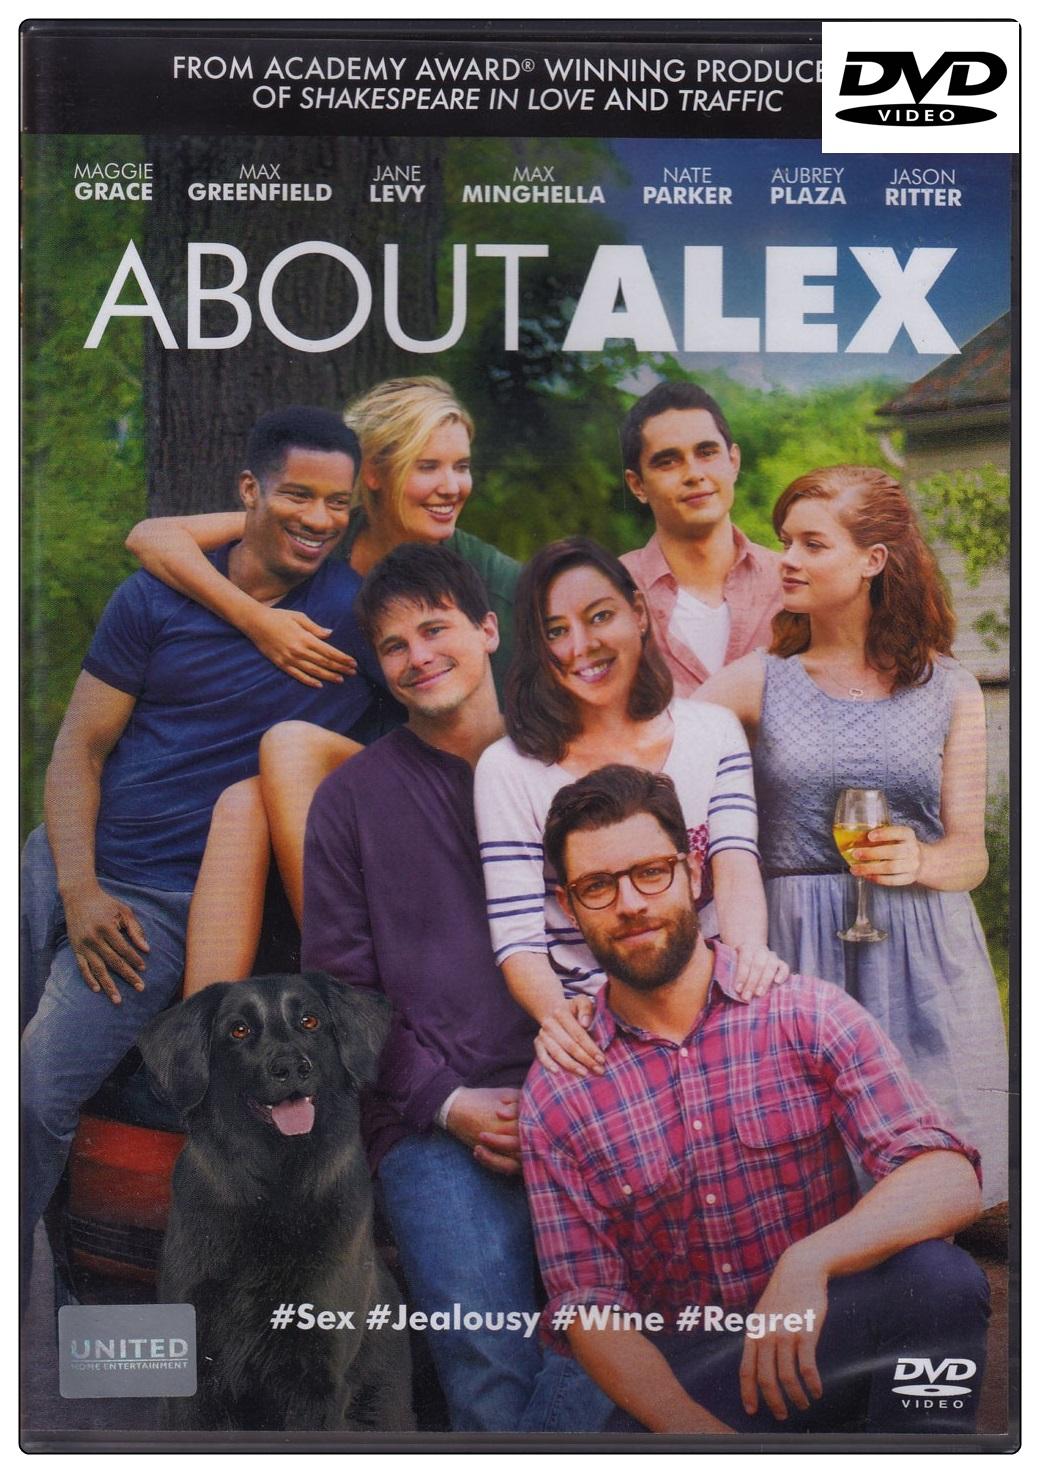 About Alex เพื่อนรัก แอบรักเพื่อน (DVD ดีวีดี)